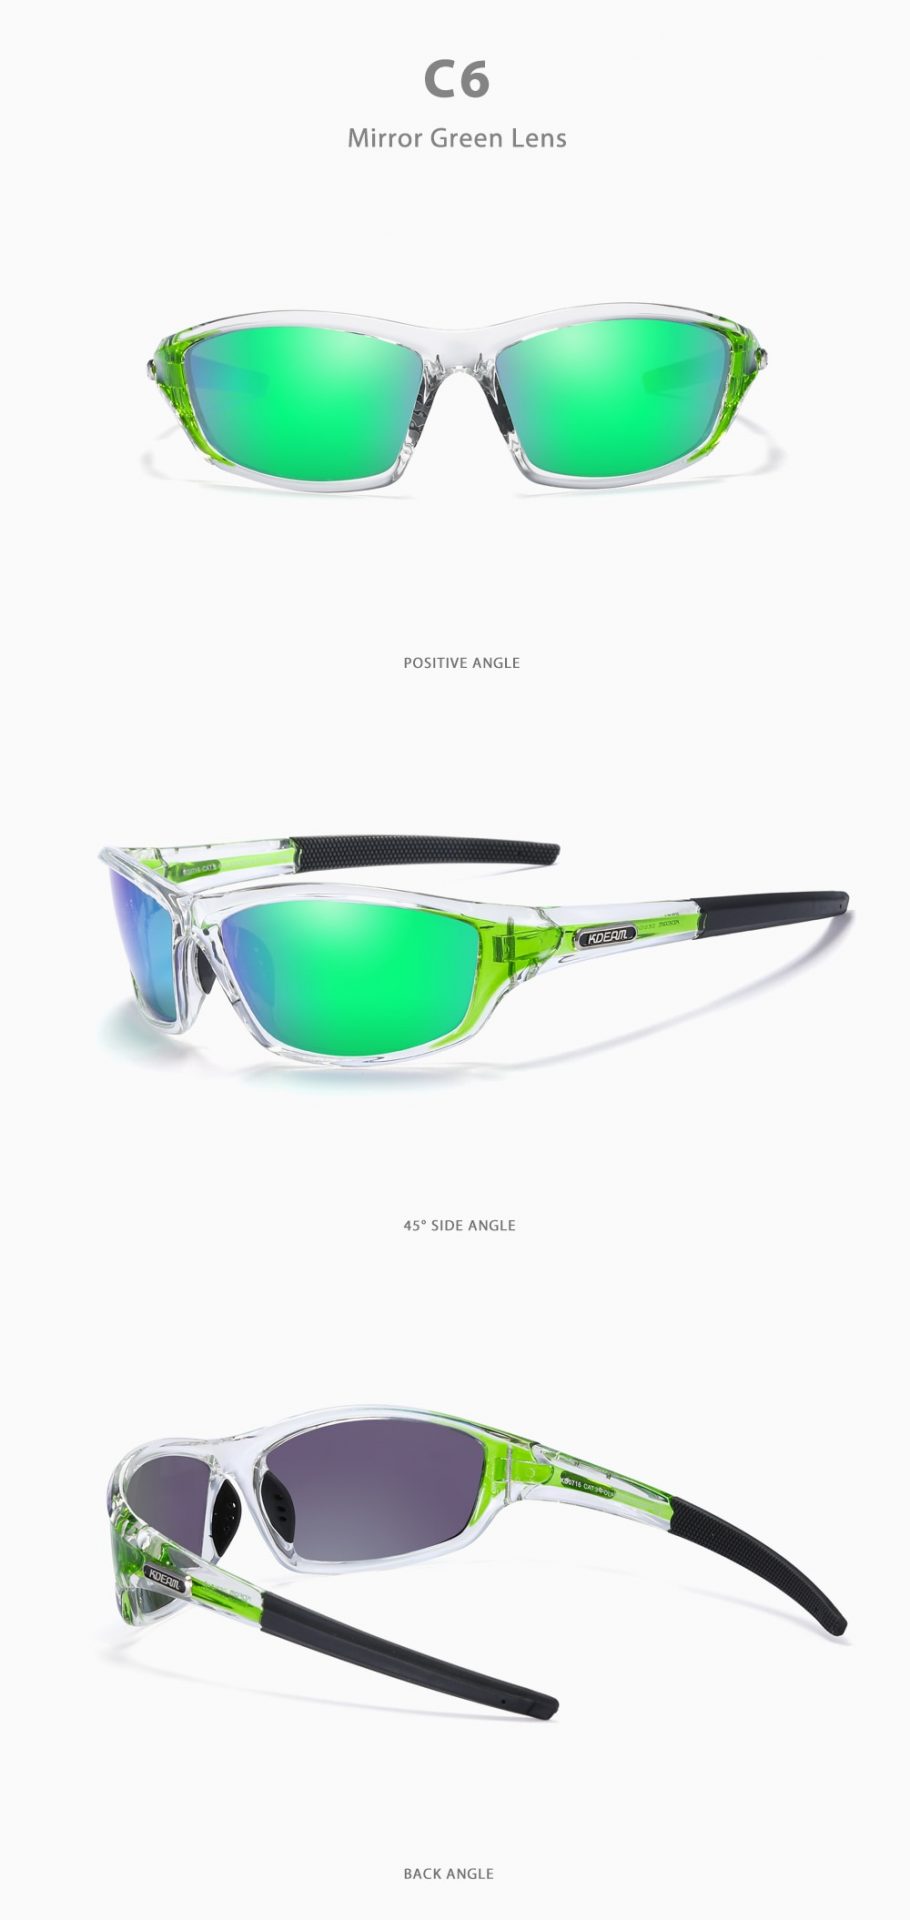 TR90 Men's Sunglasses Polarized